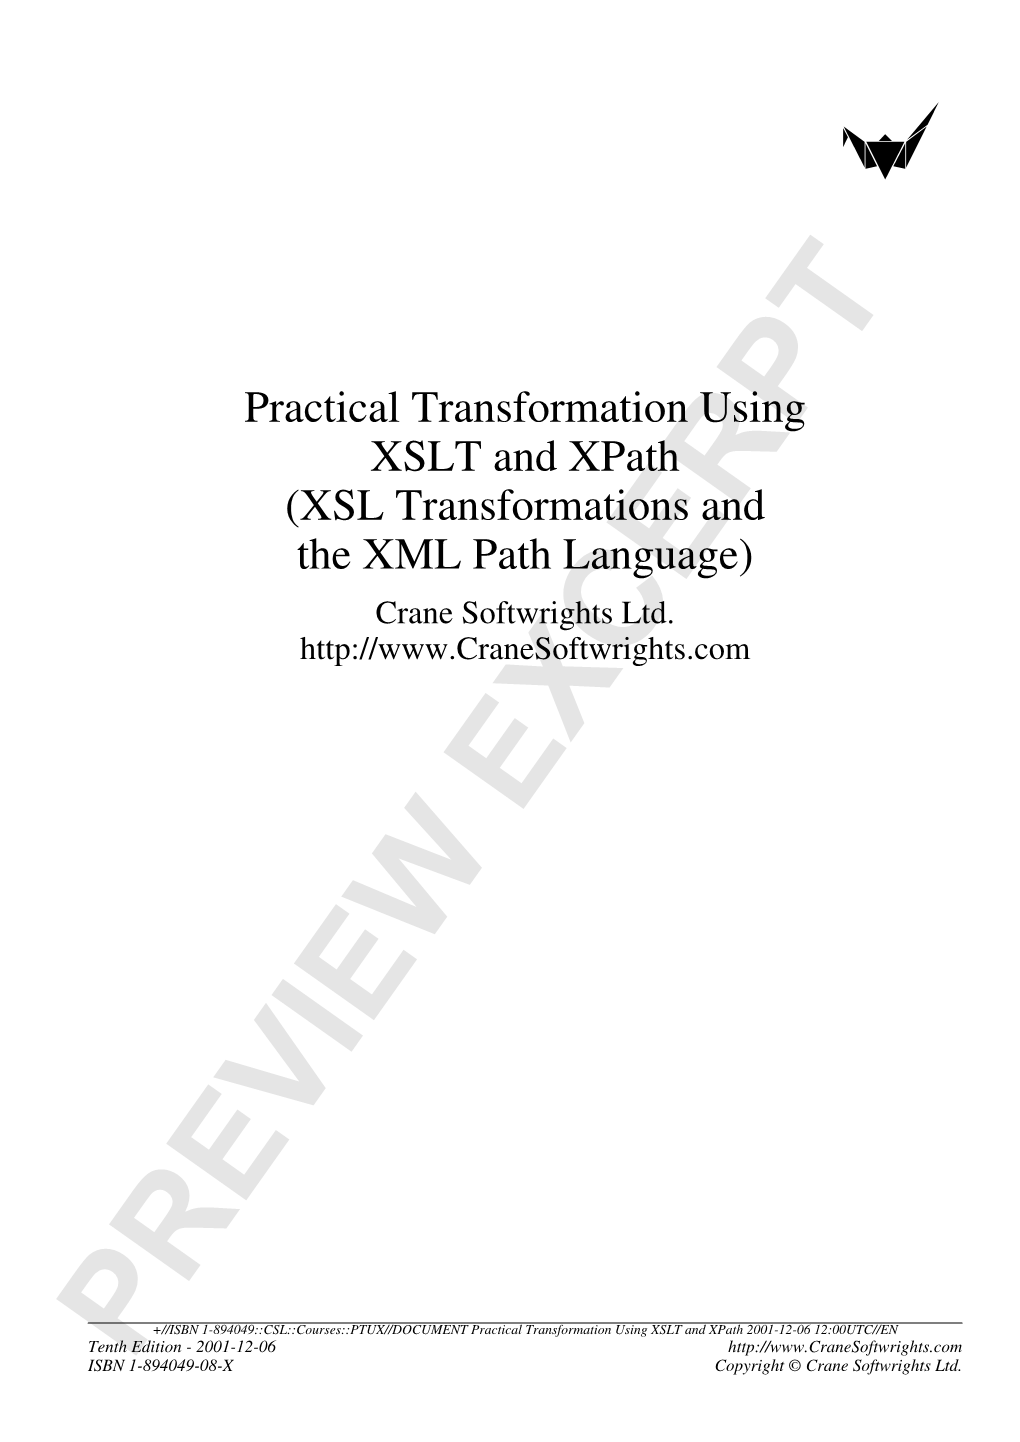 Practical Transformation Using XSLT and Xpath (XSL Transformations and the XML Path Language) Crane Softwrights Ltd